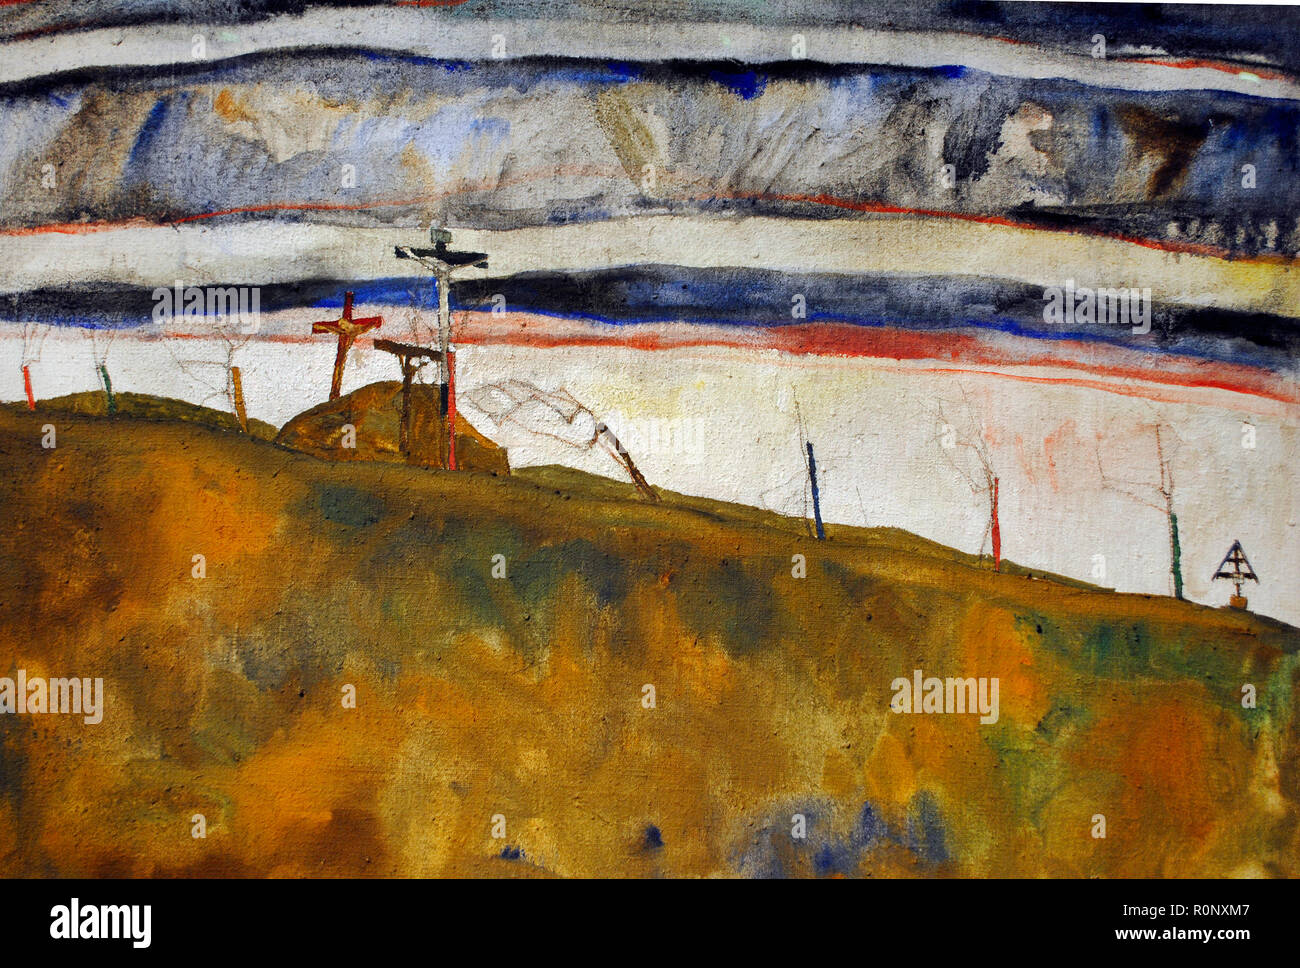 Egon Schiele (Tulln, 1890-Vienna, 1918). Austrian Expressionist painter. Mount Calvary, 1912. Pencil, gouache and oil on canvas. Leopold Museum. Vienna, Austria. Stock Photo